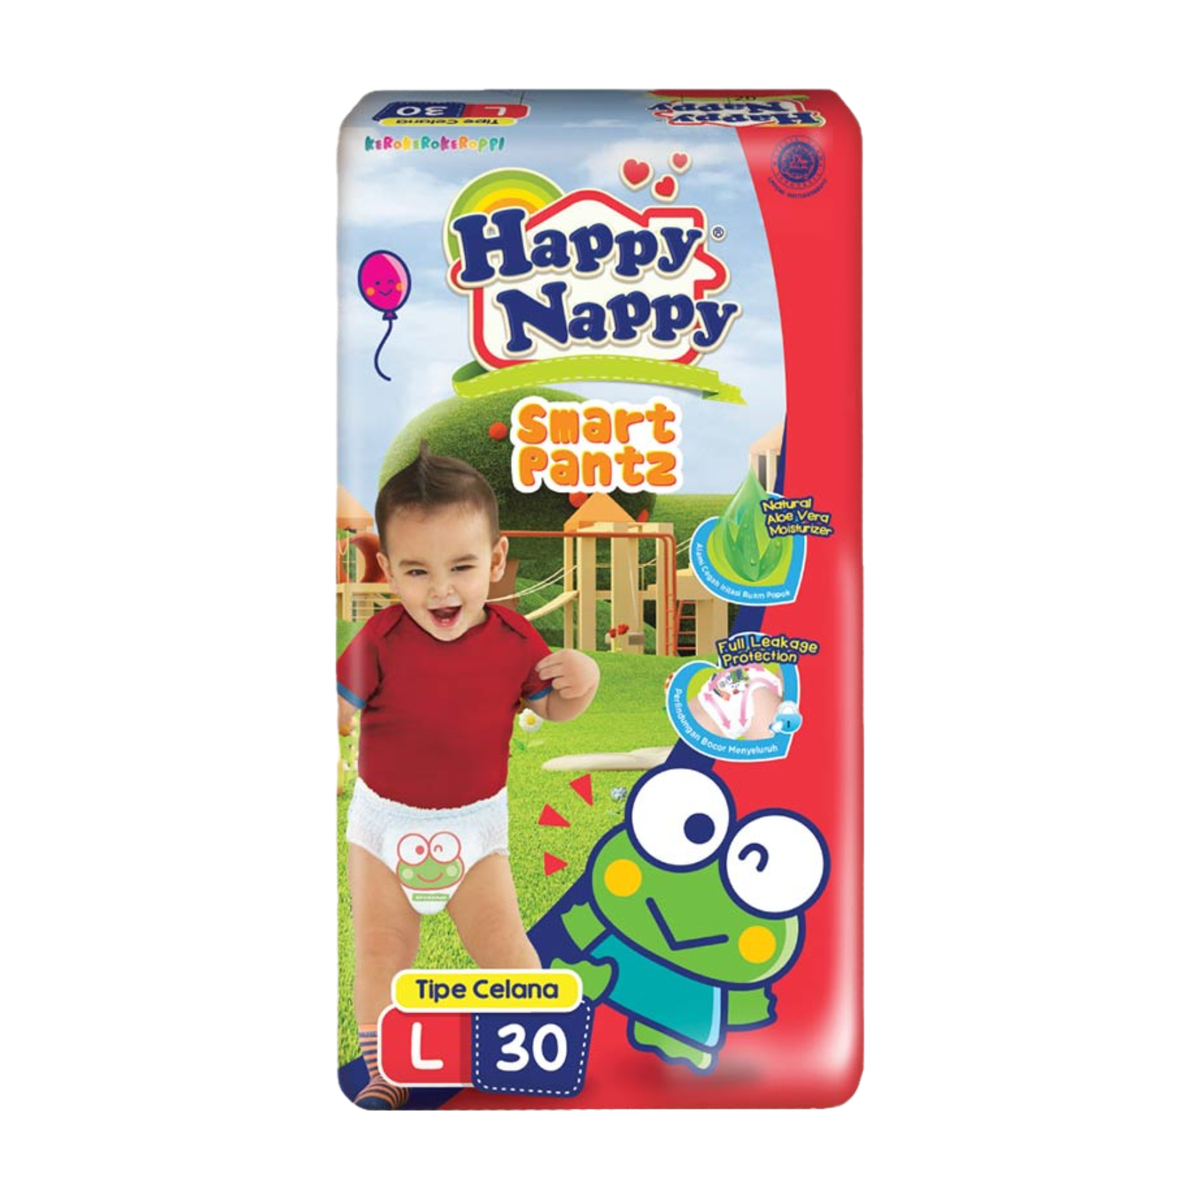 Happy Nappy Smart Pants L 30pcs